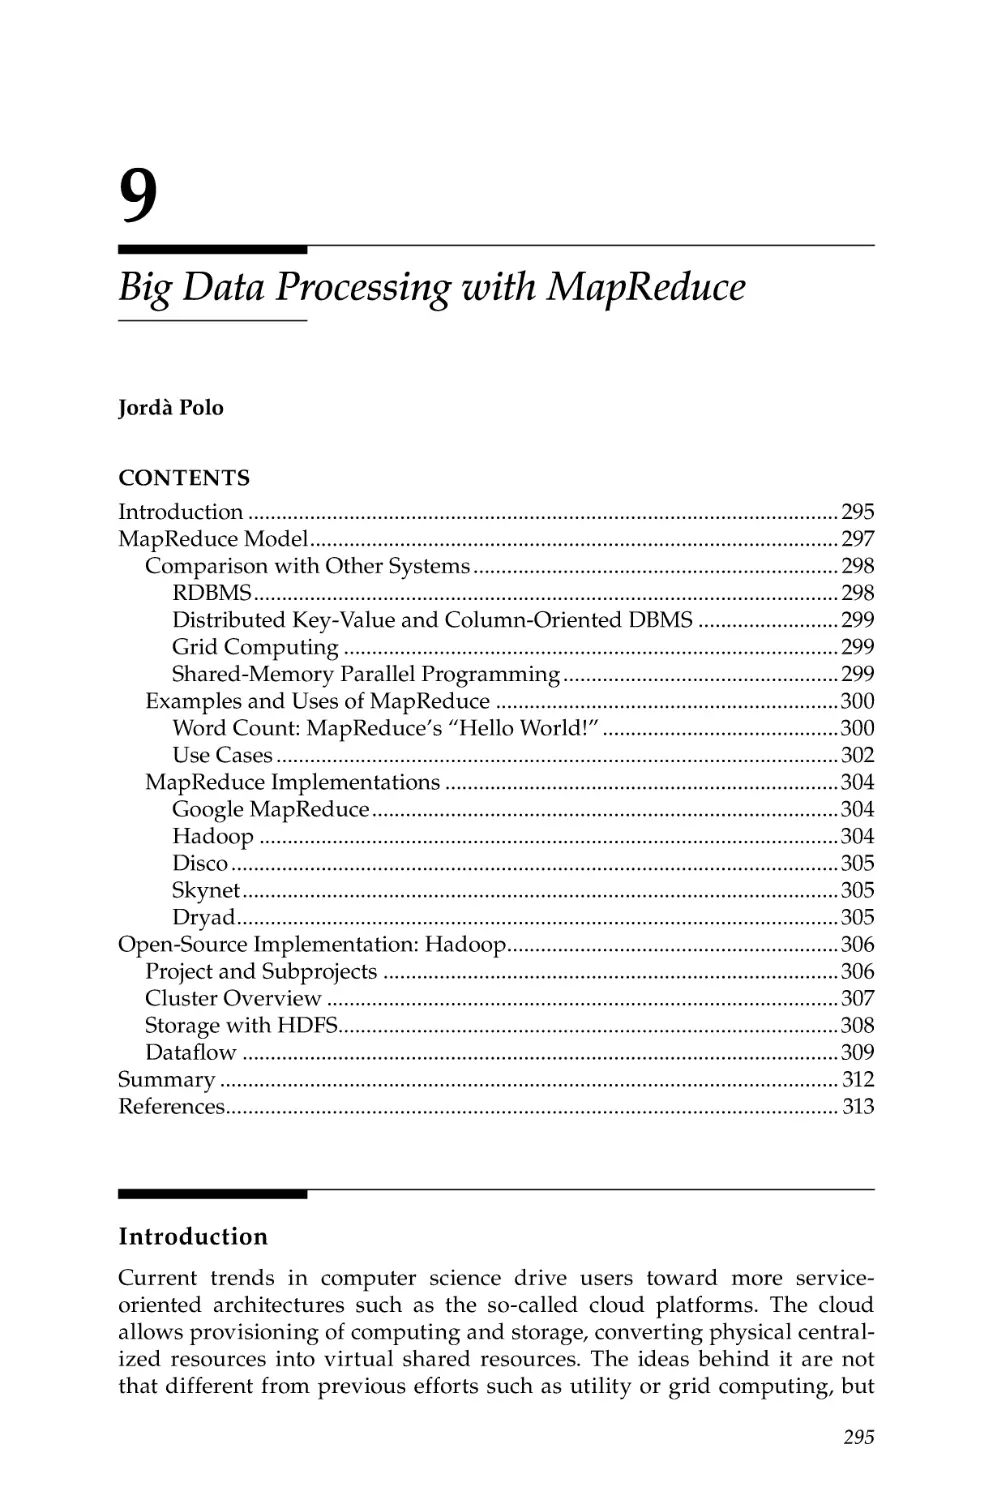 9. Big Data Processing with MapReduce